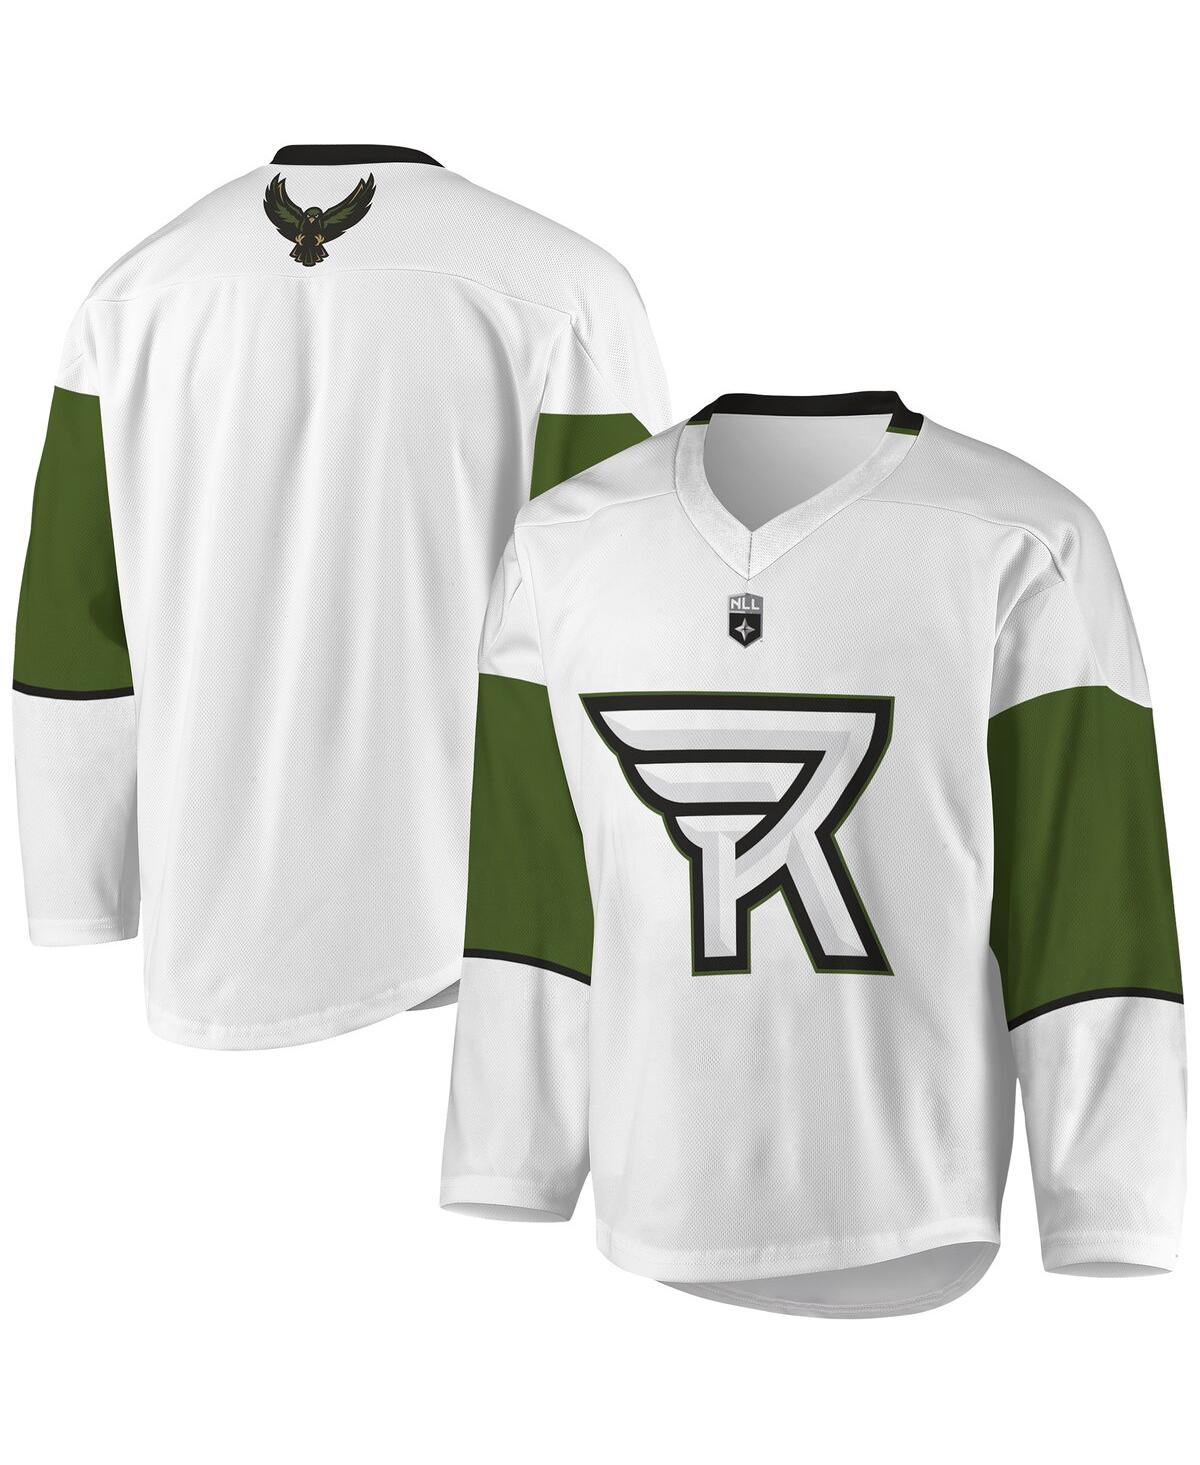 Men's White, Green Rochester Knighthawks Replica Jersey - White, Green